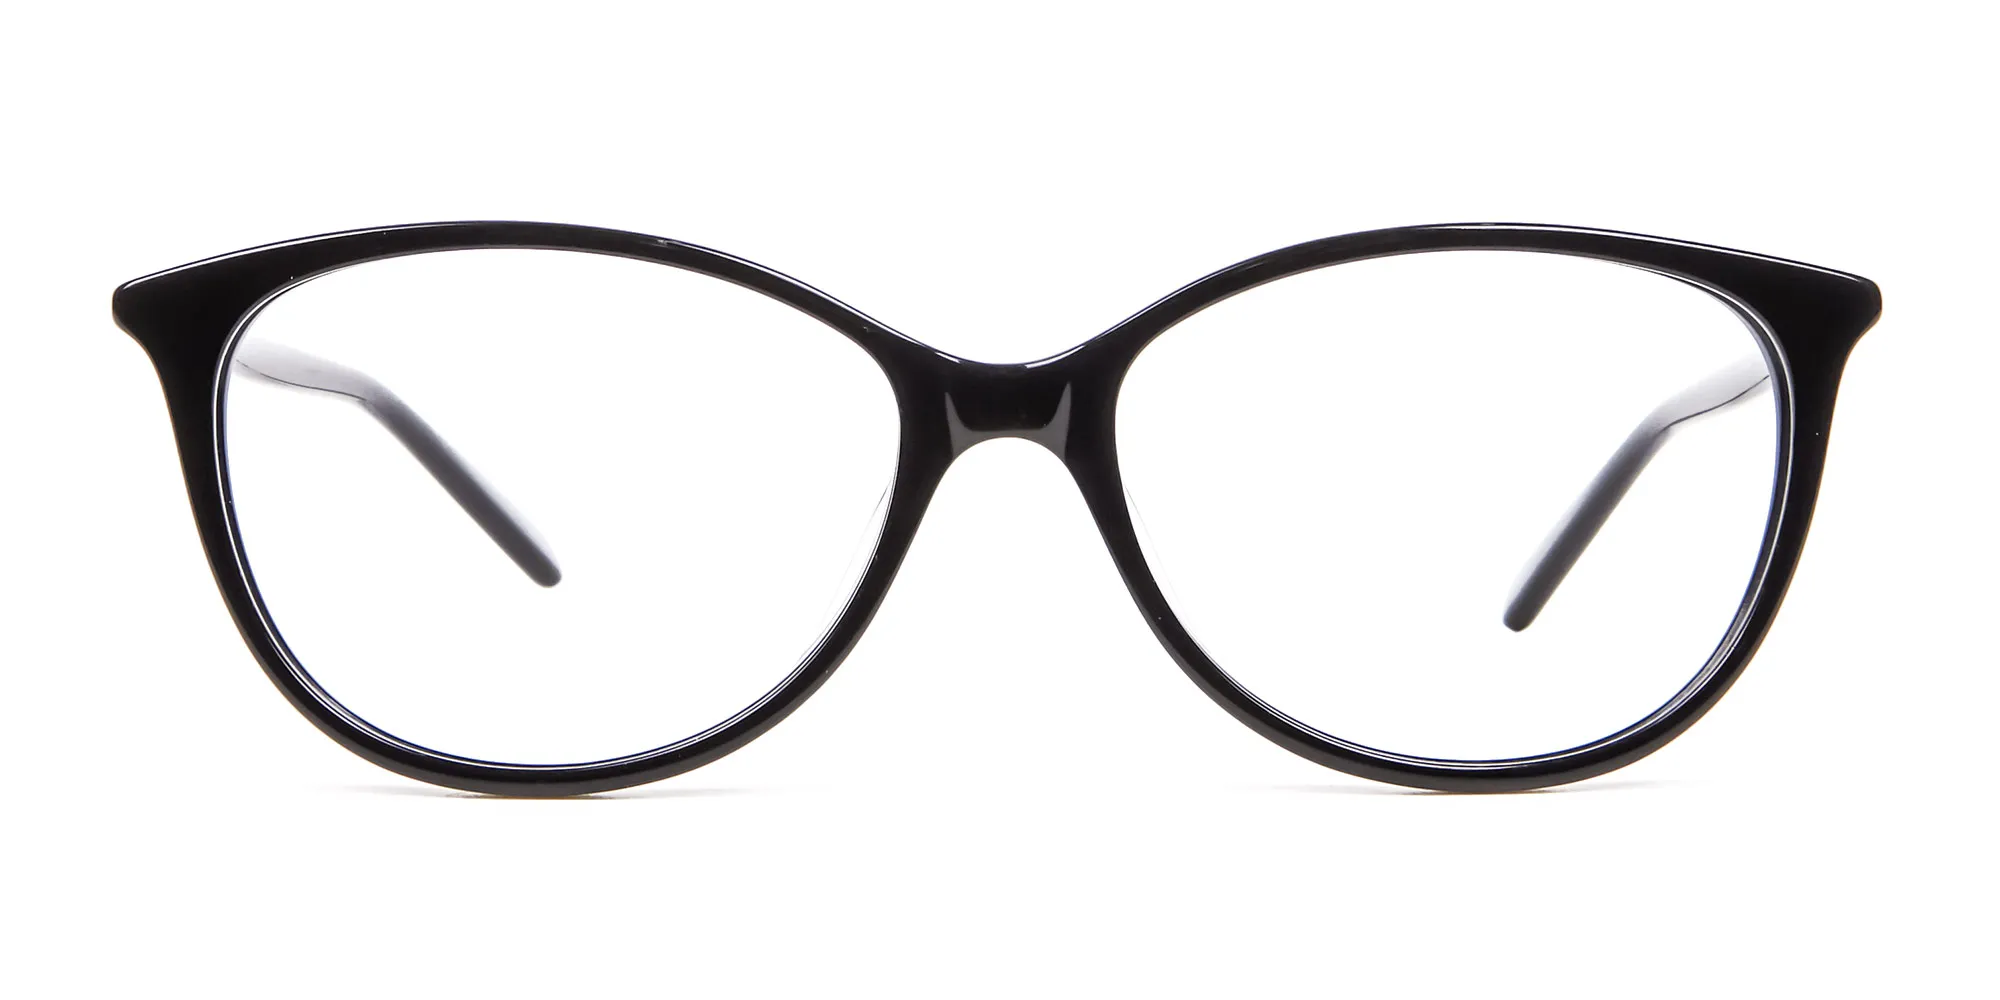 Cool Black Cat Eye Glasses -2